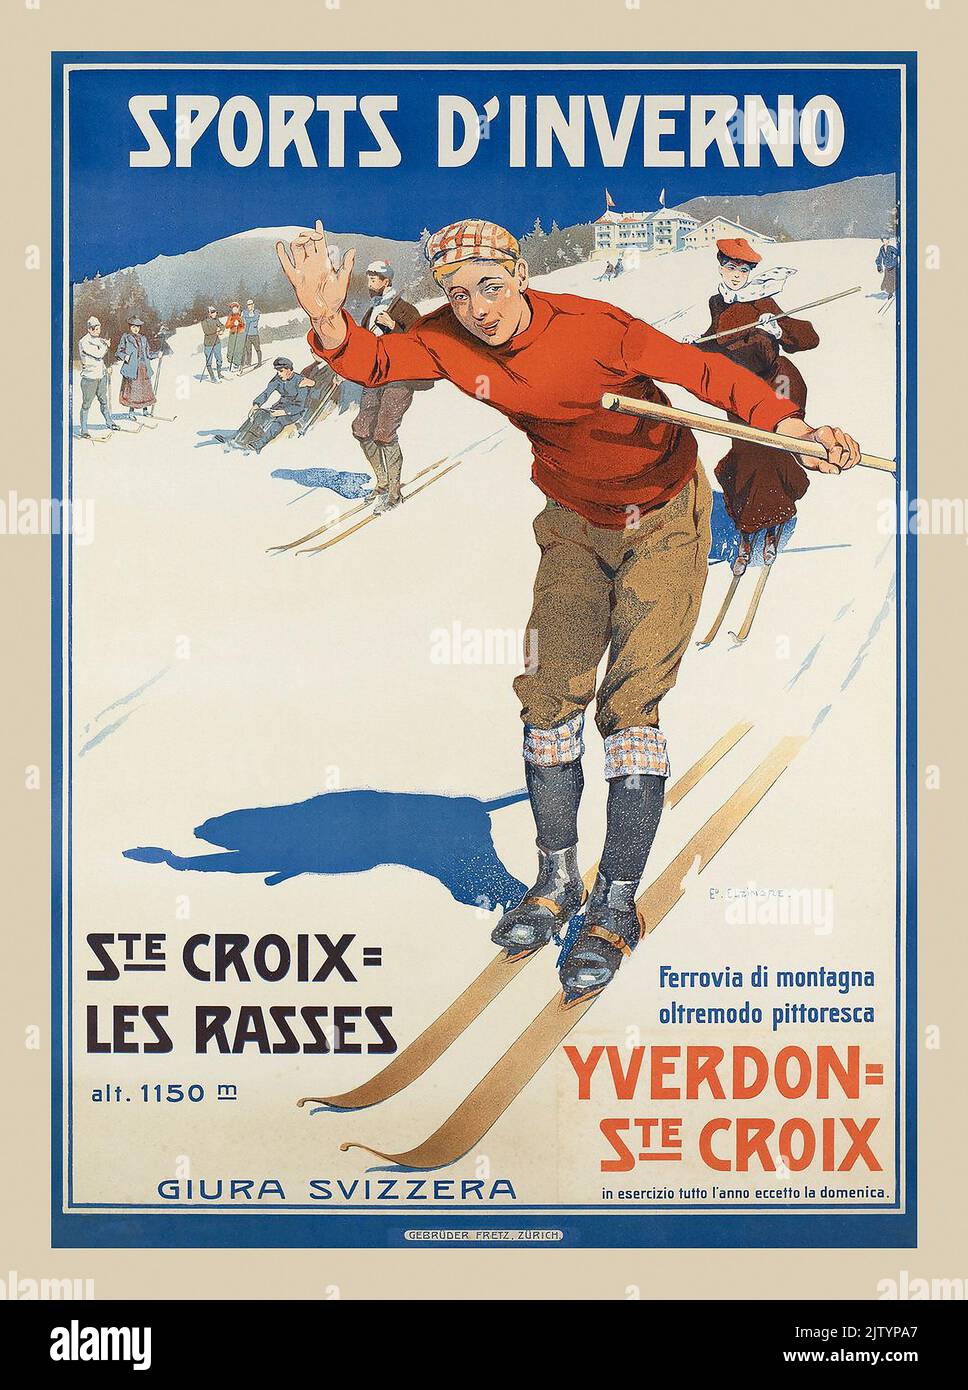 Vintage Sci Poster 1900s Travel Sport Style Fashion Sports d'Inverno, Ste Croix Les Rasses, Yverdon - Ste Croix di Edouard Elzingre 1905 Foto Stock